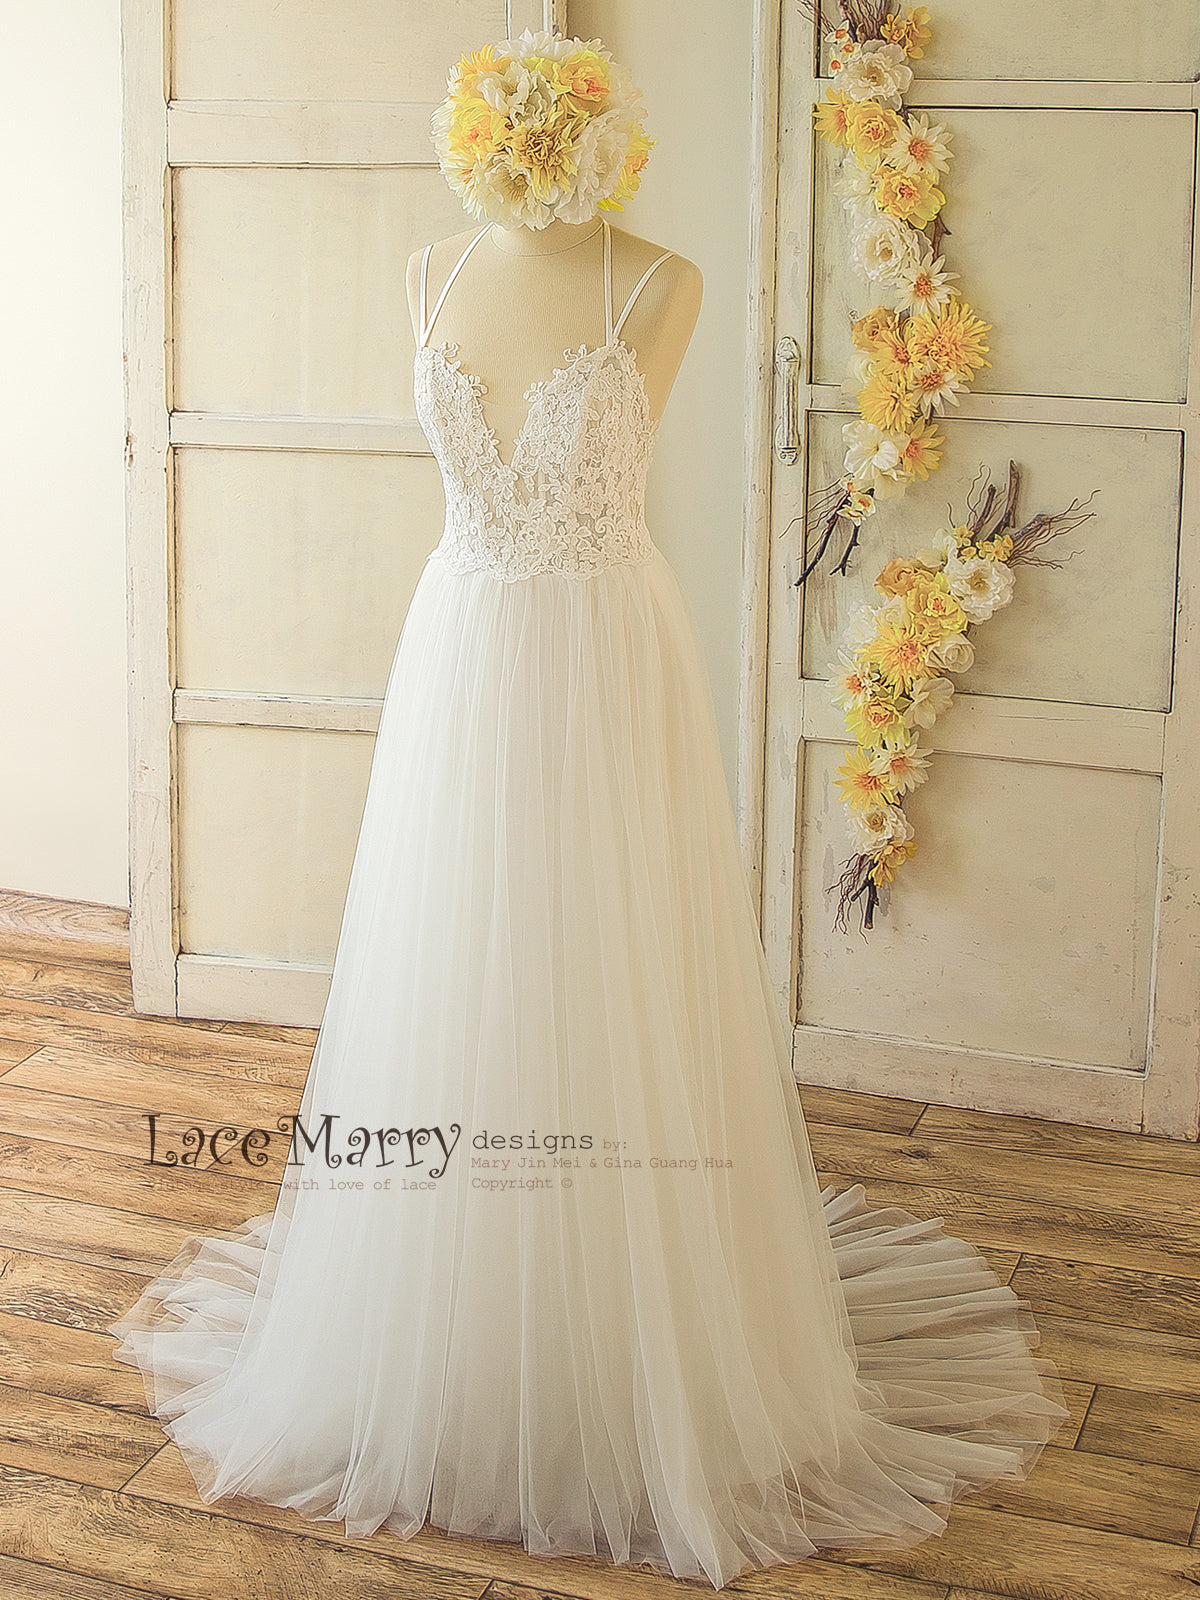 Elegant Wedding Dress with Cross Design Straps Featuring Sheer